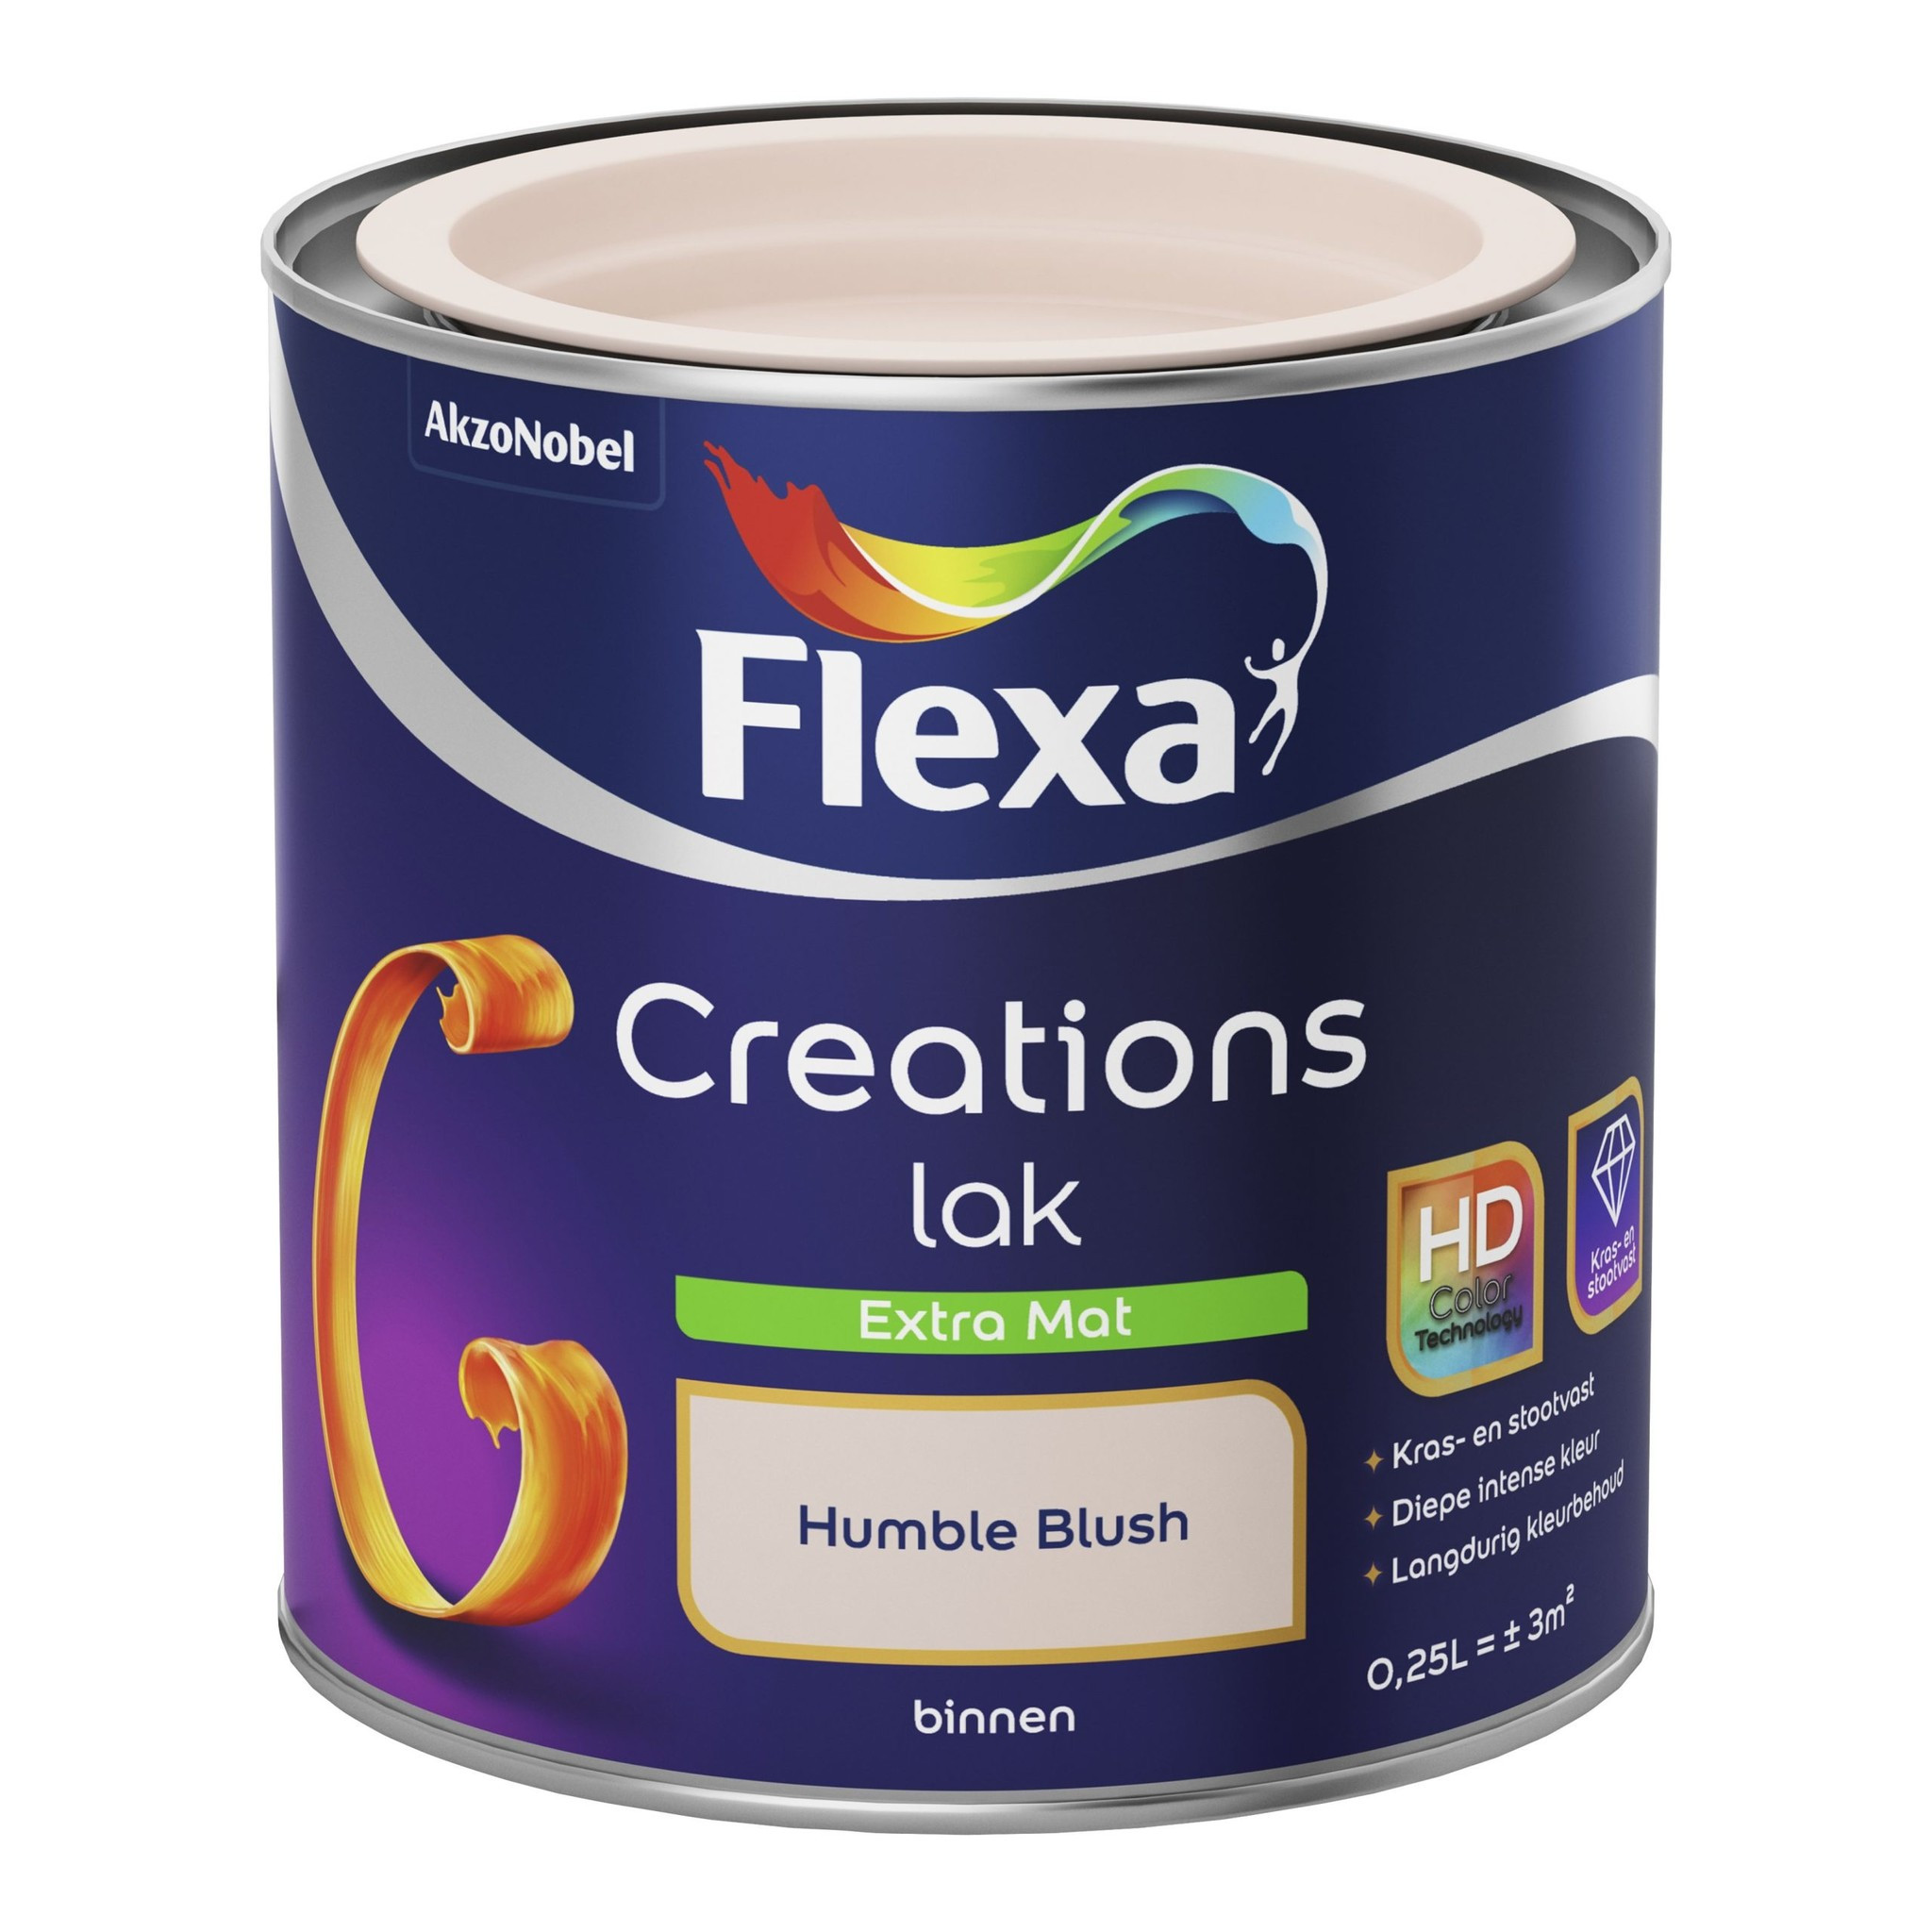 Flexa Creations Lak Extra Mat - Humble Blush